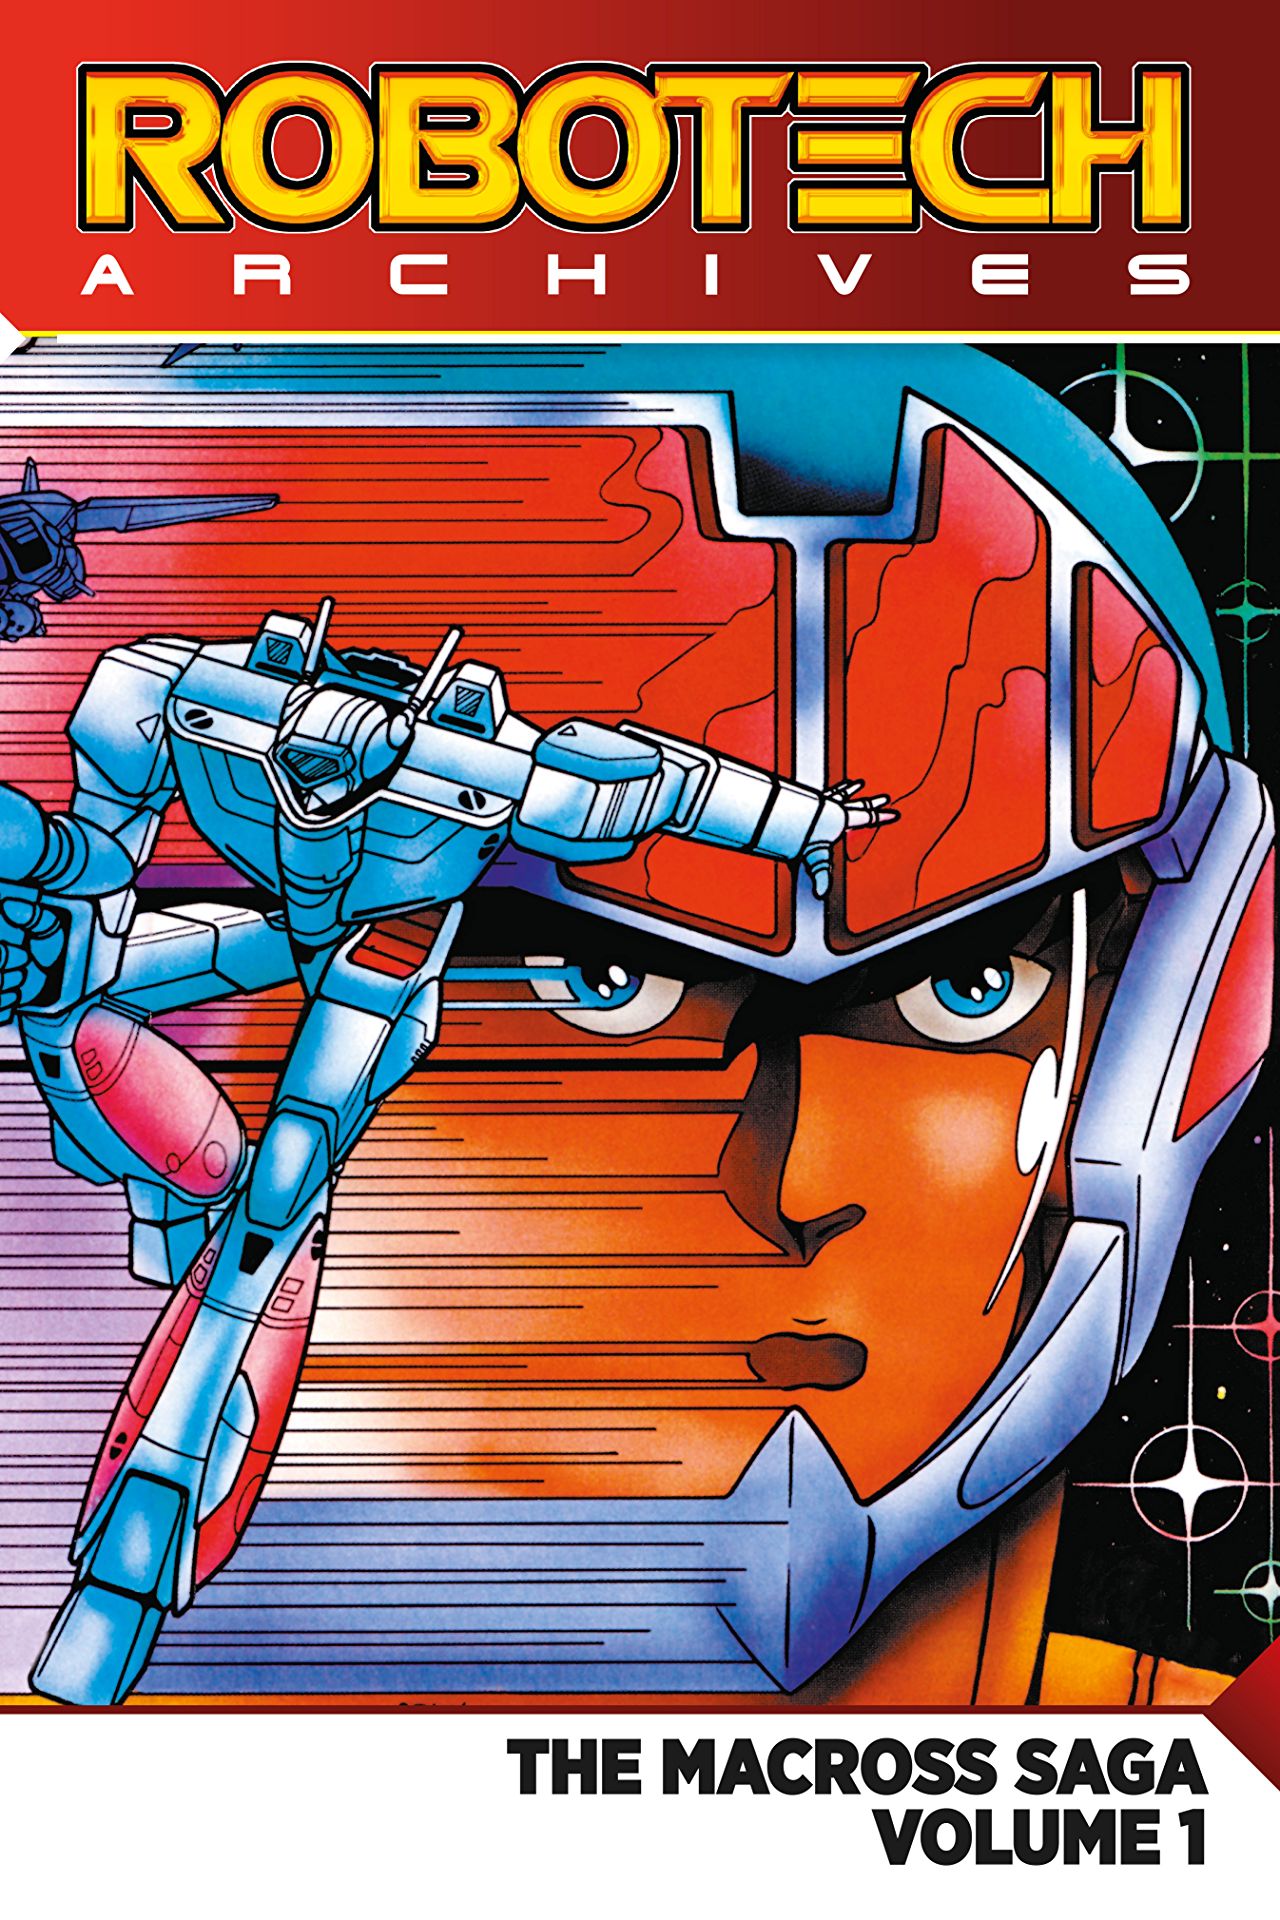 Robotech - Archives: The Macross Saga Volume 1 image count 0